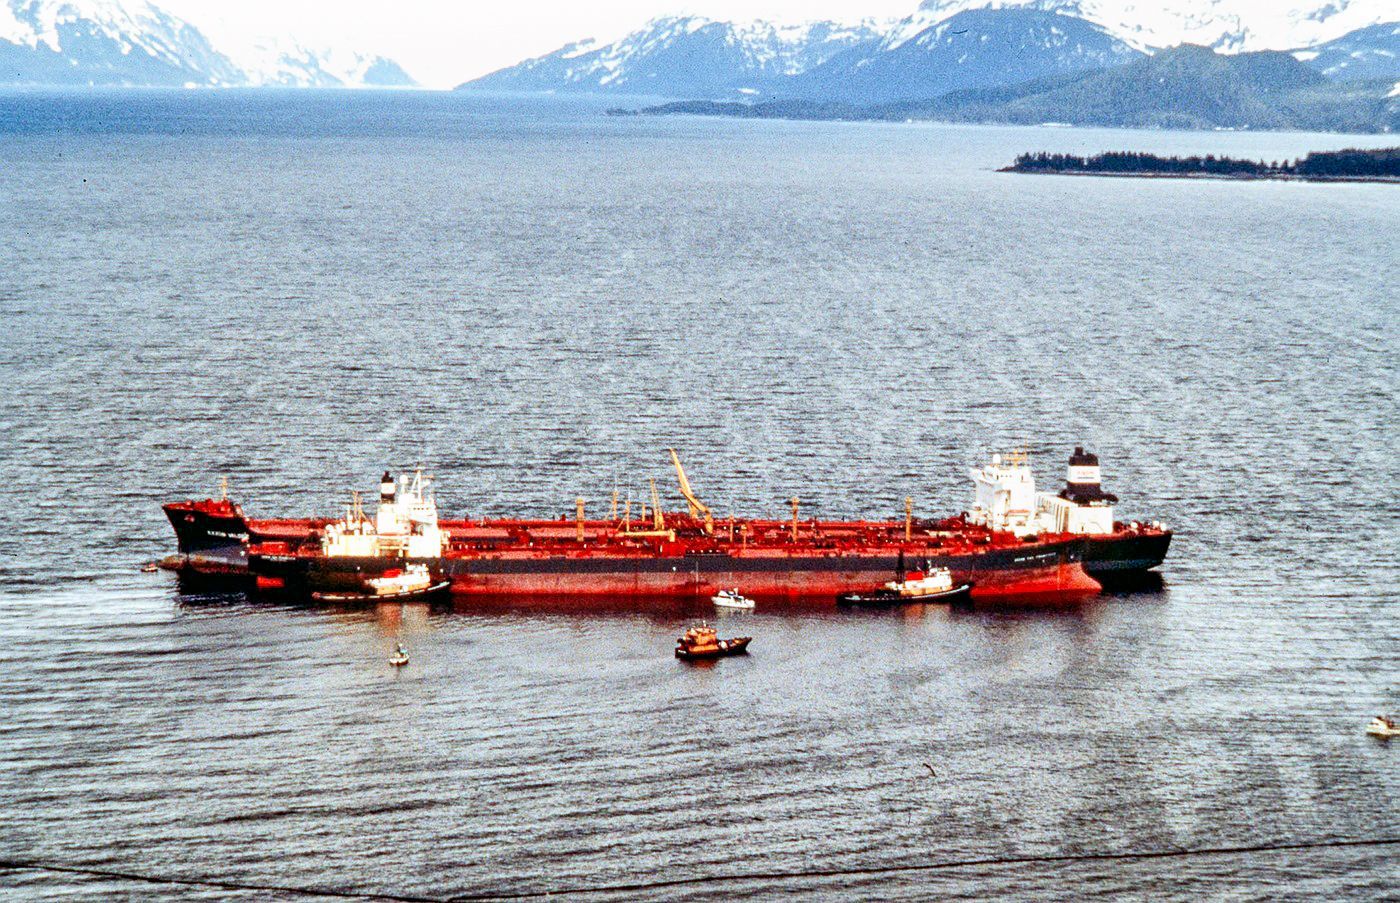 Tanker, Exxon Valdez, ekologická katastrofa, ropná skvrna, únik, Aljaška, USA, historie, výročí, Zahraničí